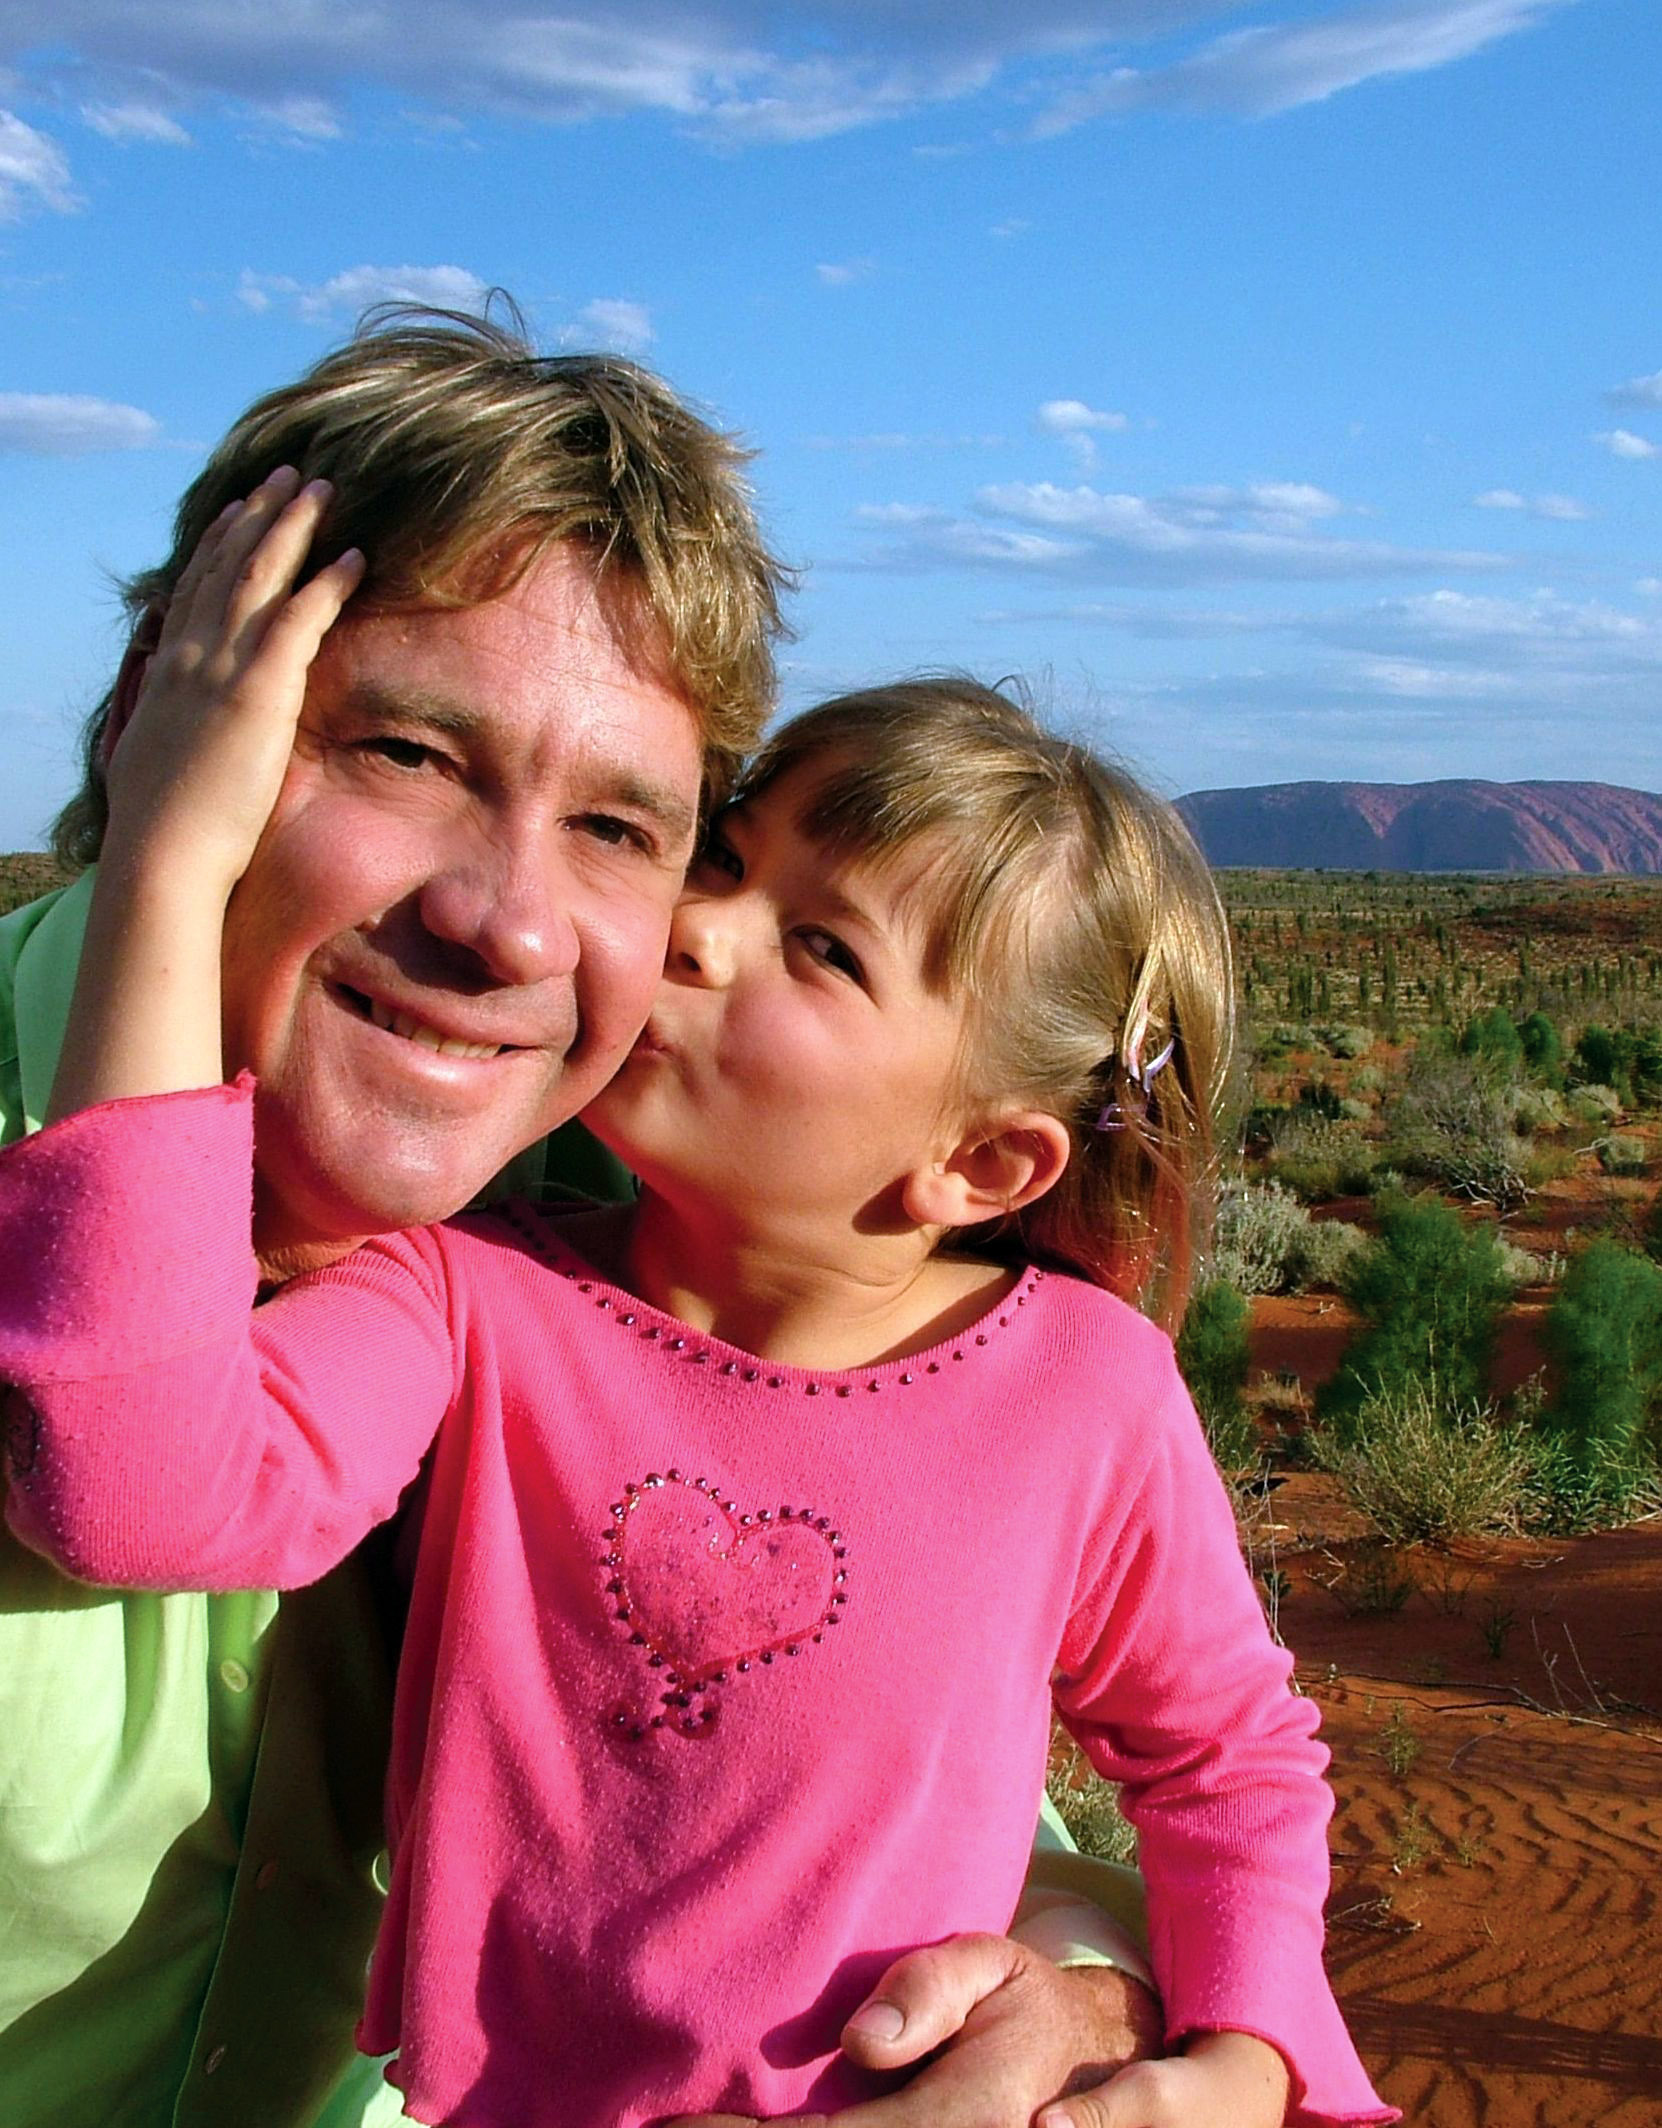 Steve Irwin poses with his daughter Bindi Irwin on October 2, 2006 in Uluru, Australia.| Source: Getty Images